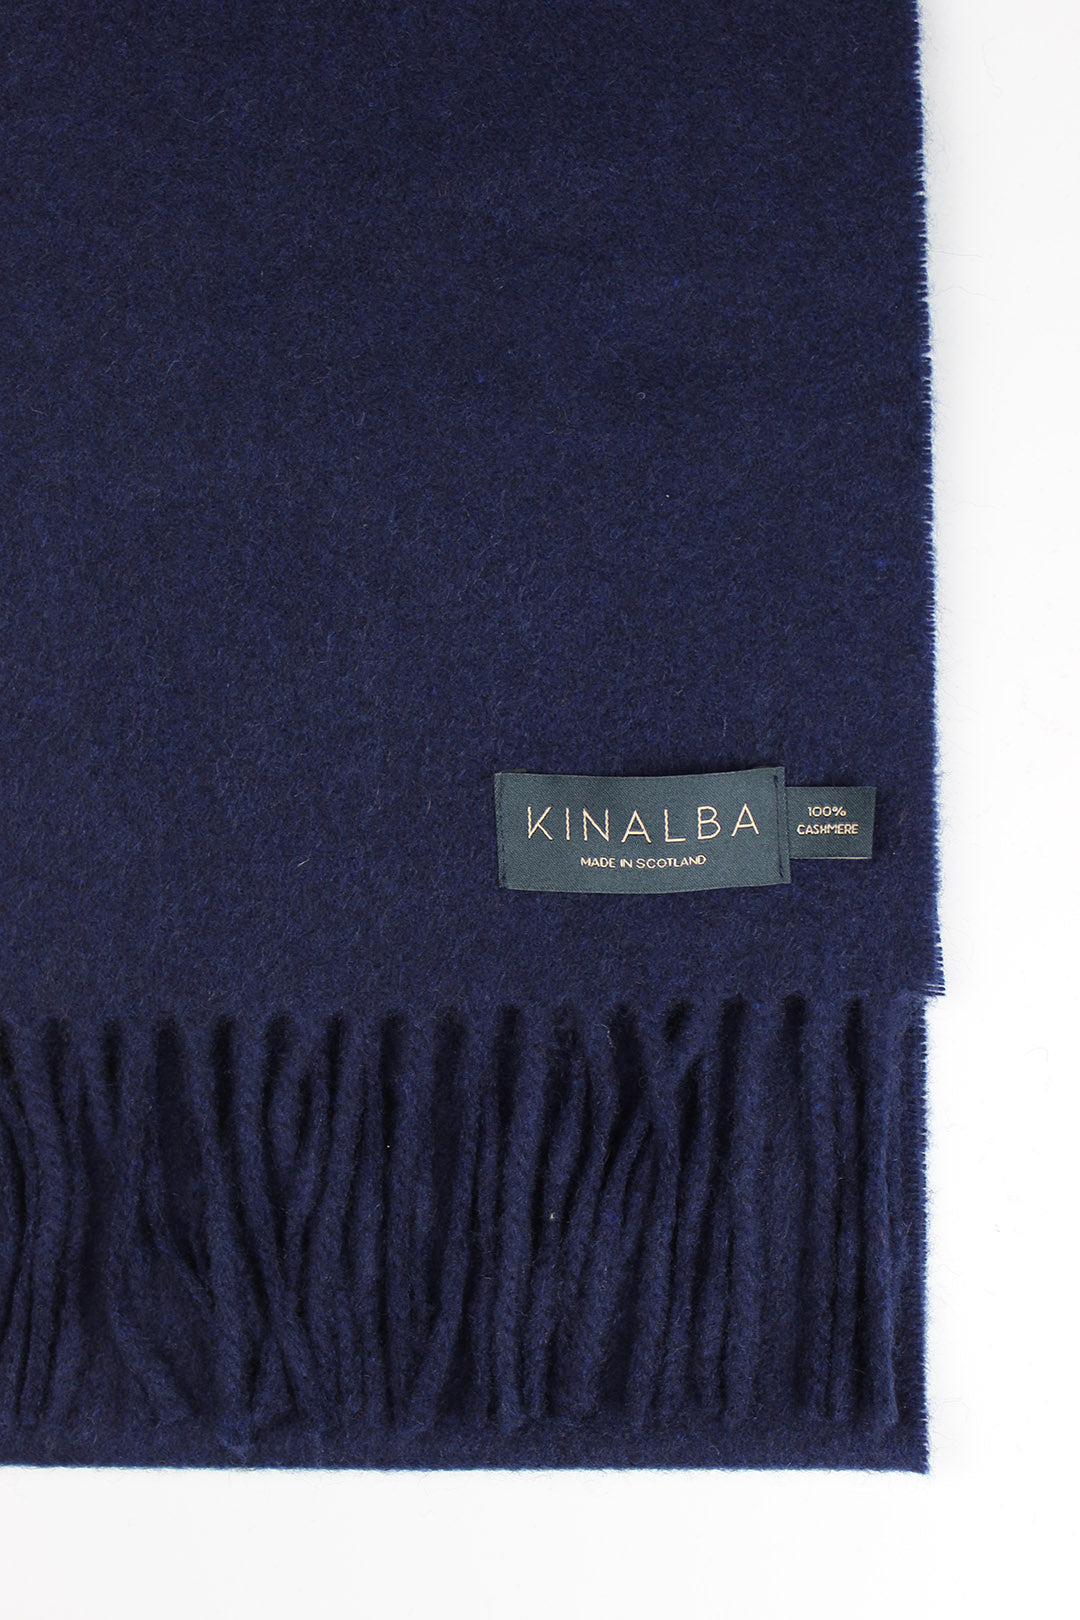 Kinalba Oban Scarf in Navy. Scottish Textiles Showcase.